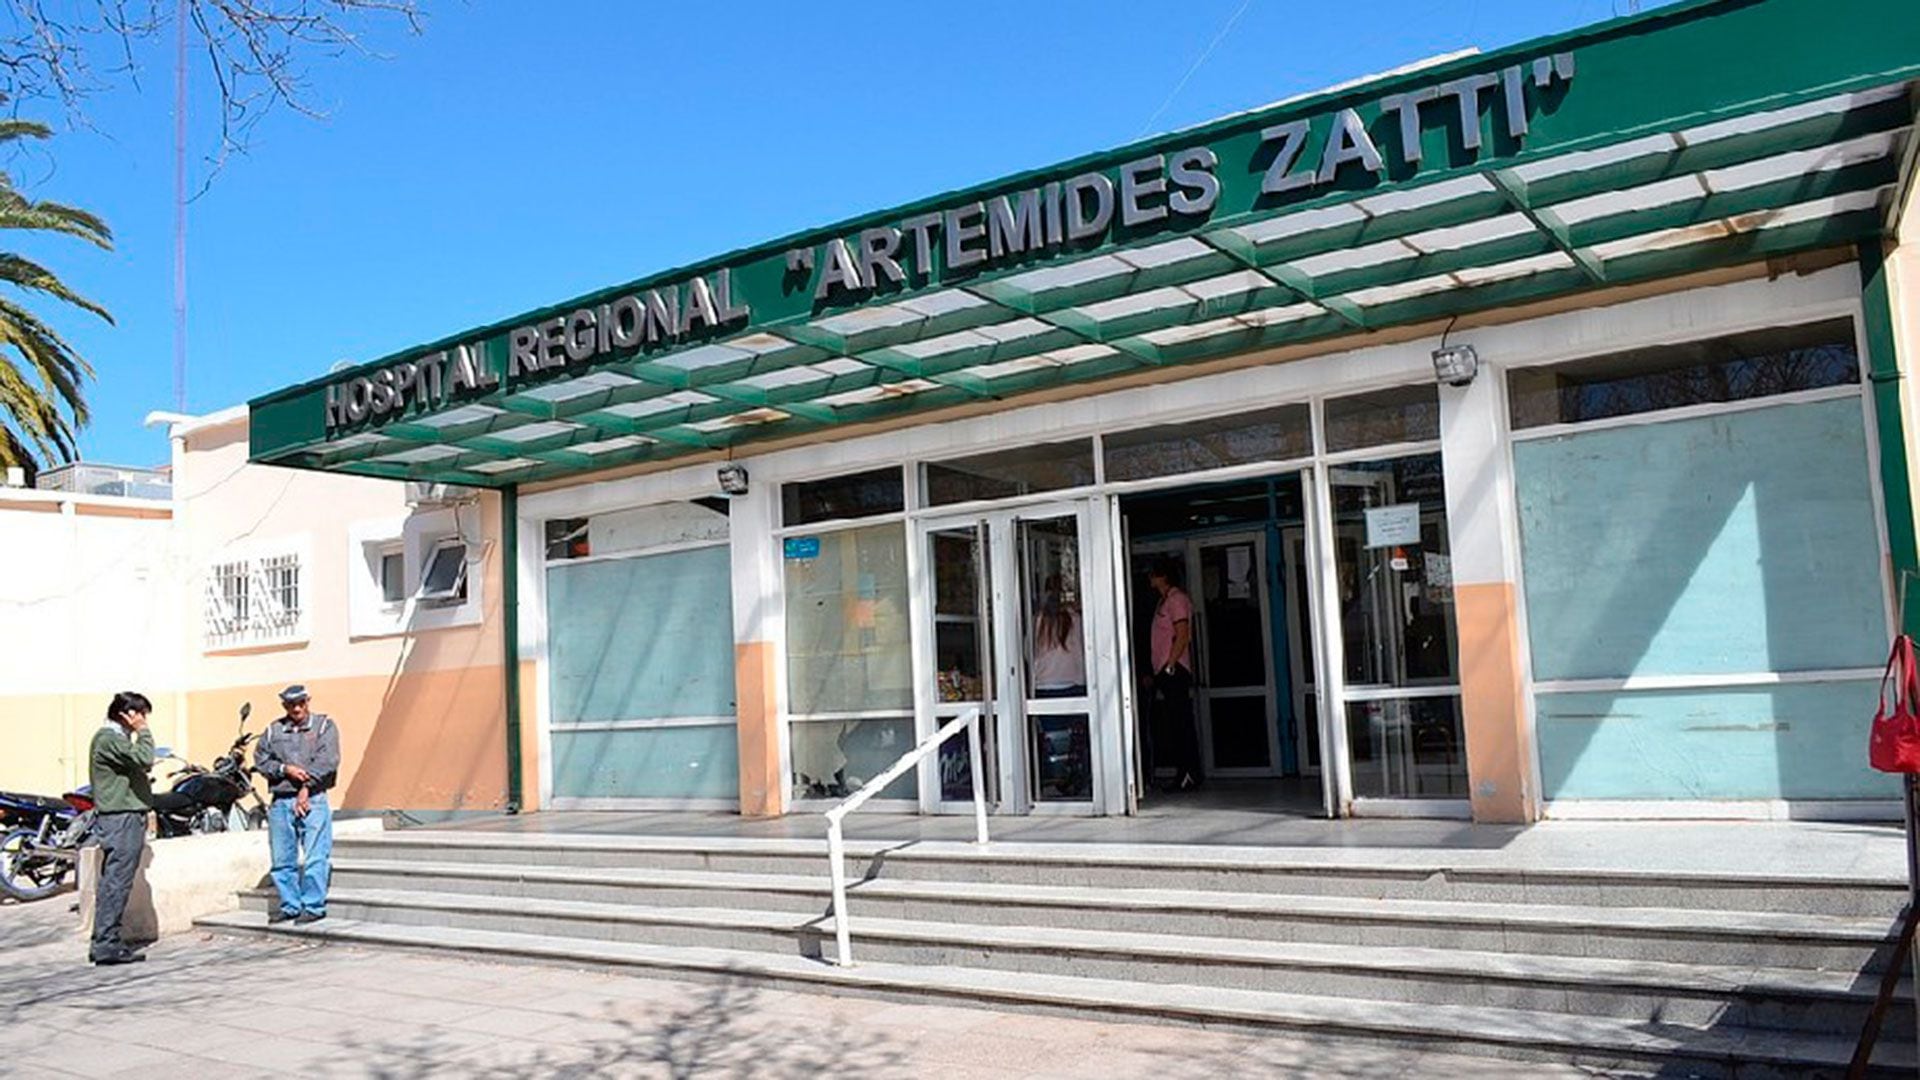 Hospital de Viedma Artemides Zatti